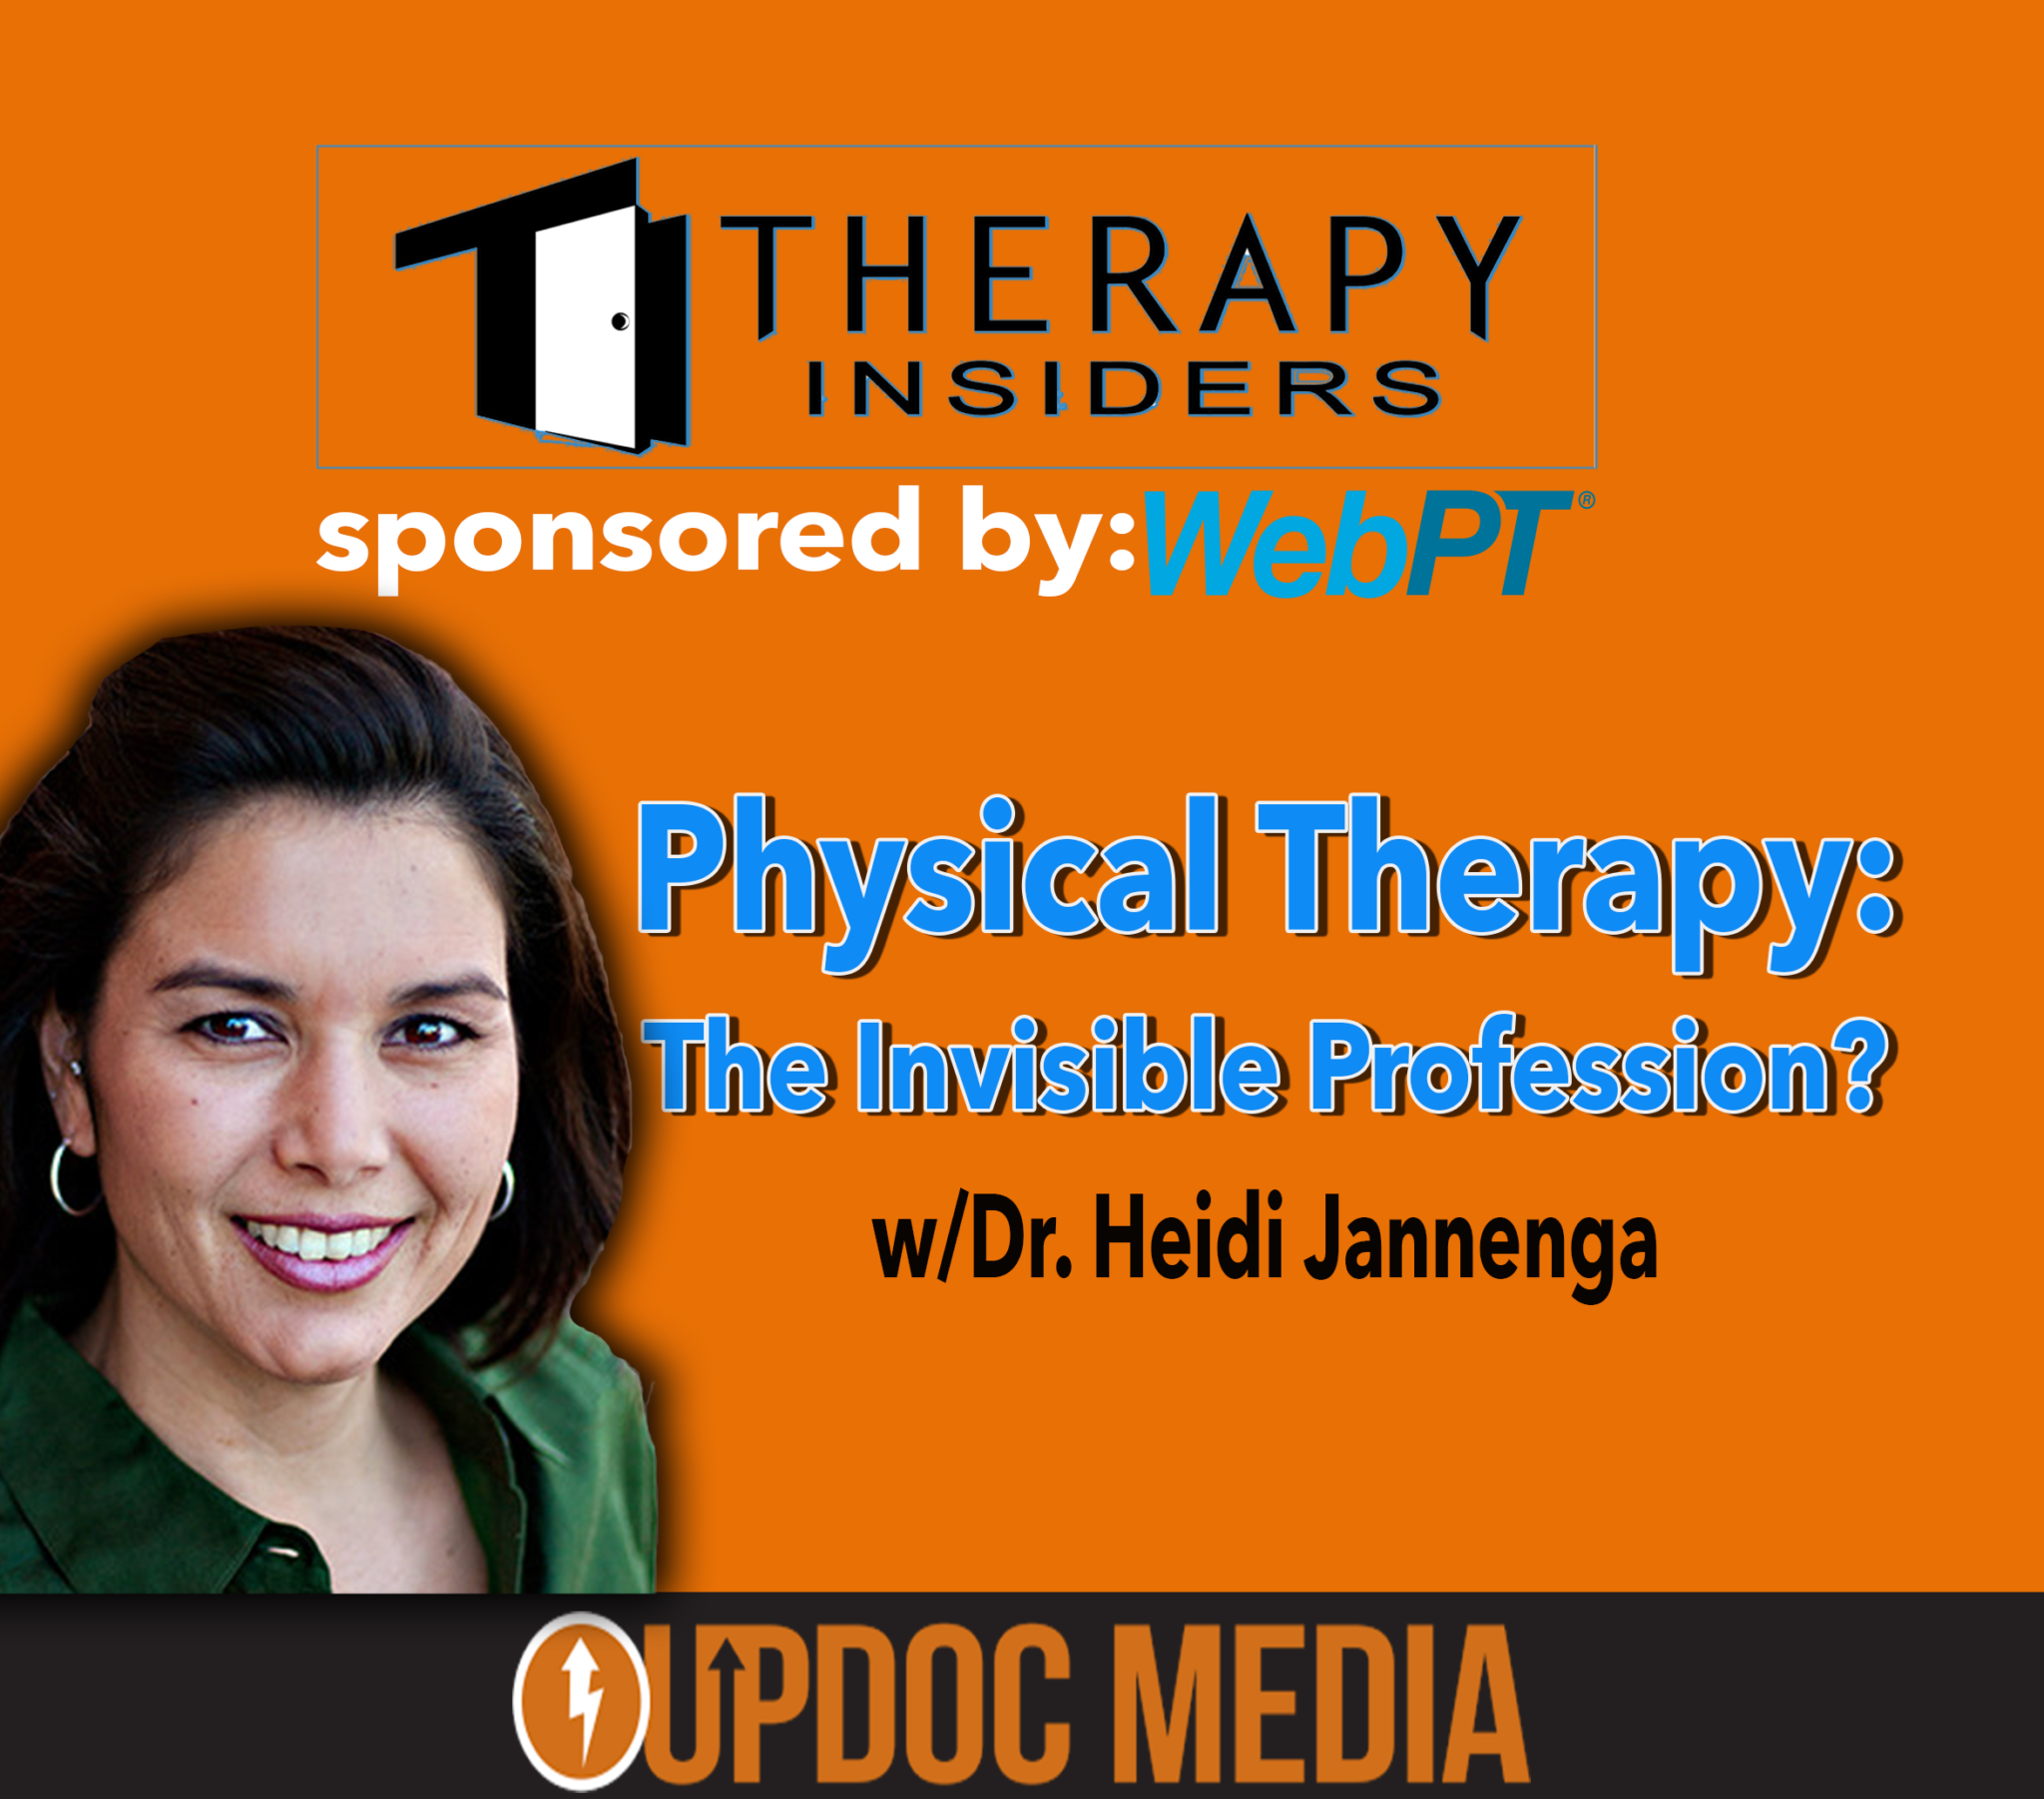 WEBPT president Heidi Jannenga on Therapy Insiders podcast